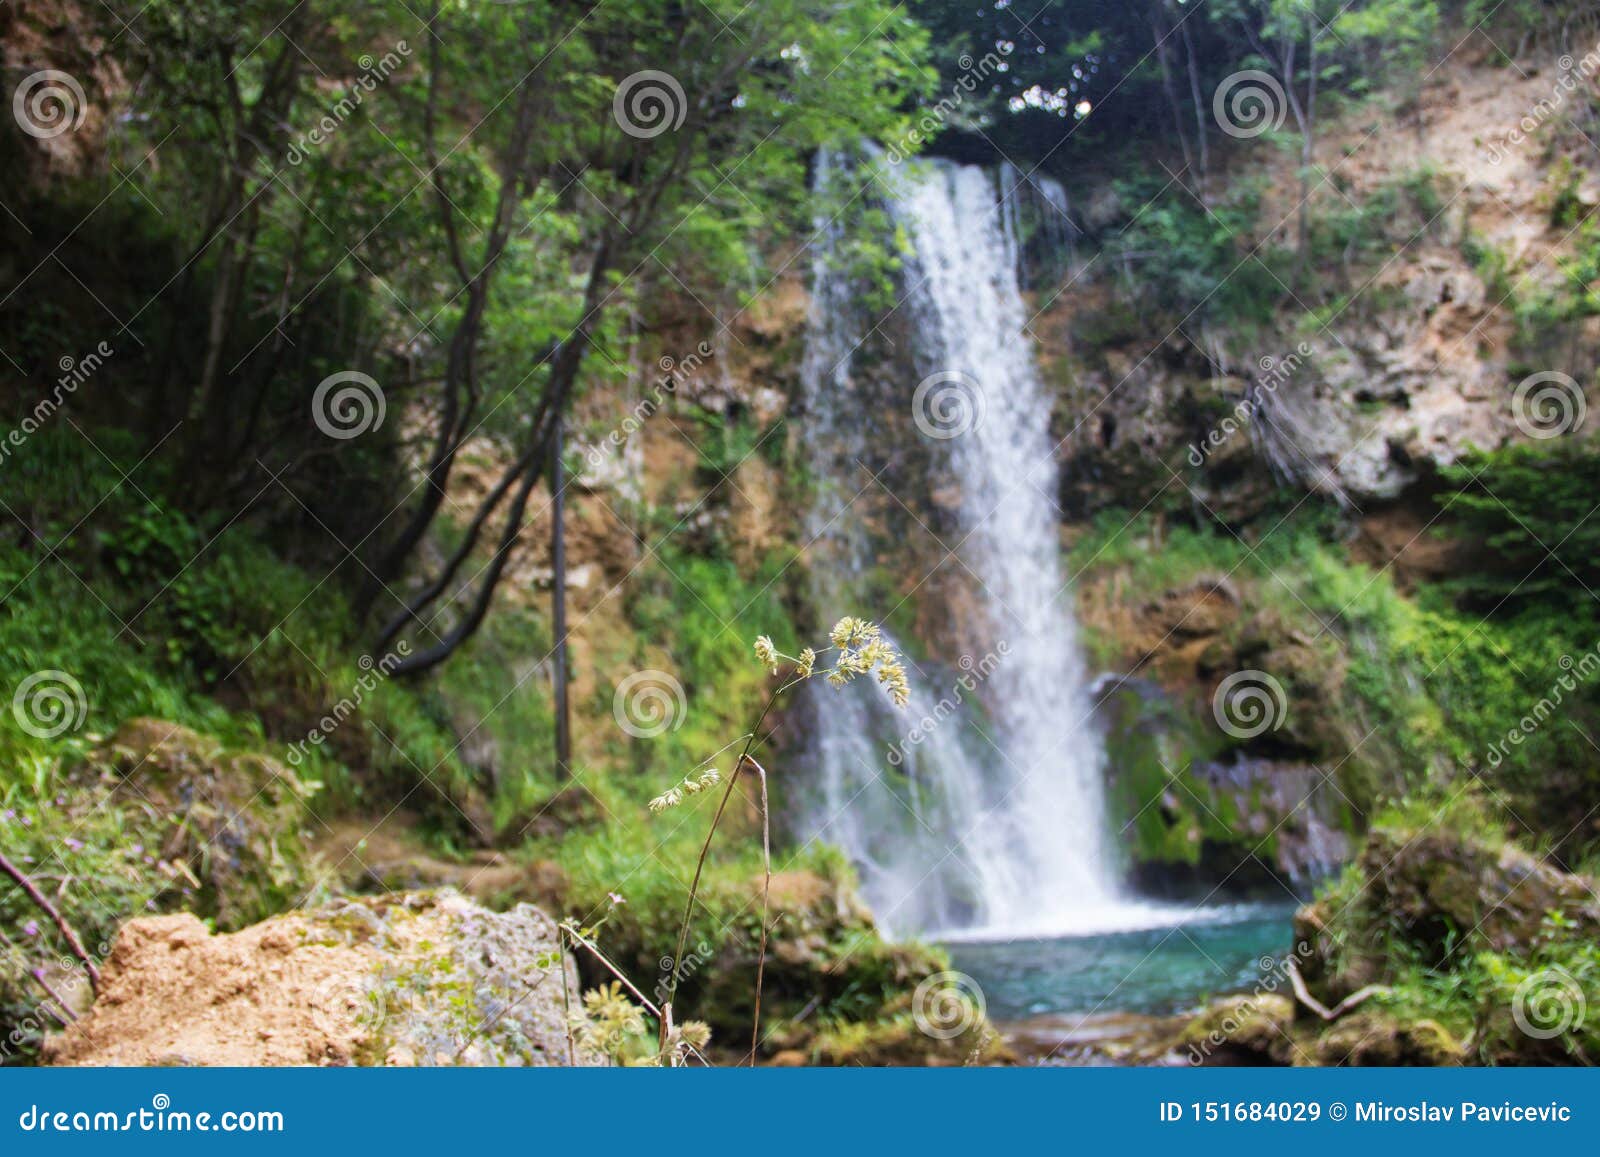 biggest waterfall in serbia, called `veliki buk`, near despotovac city, eastern serbia